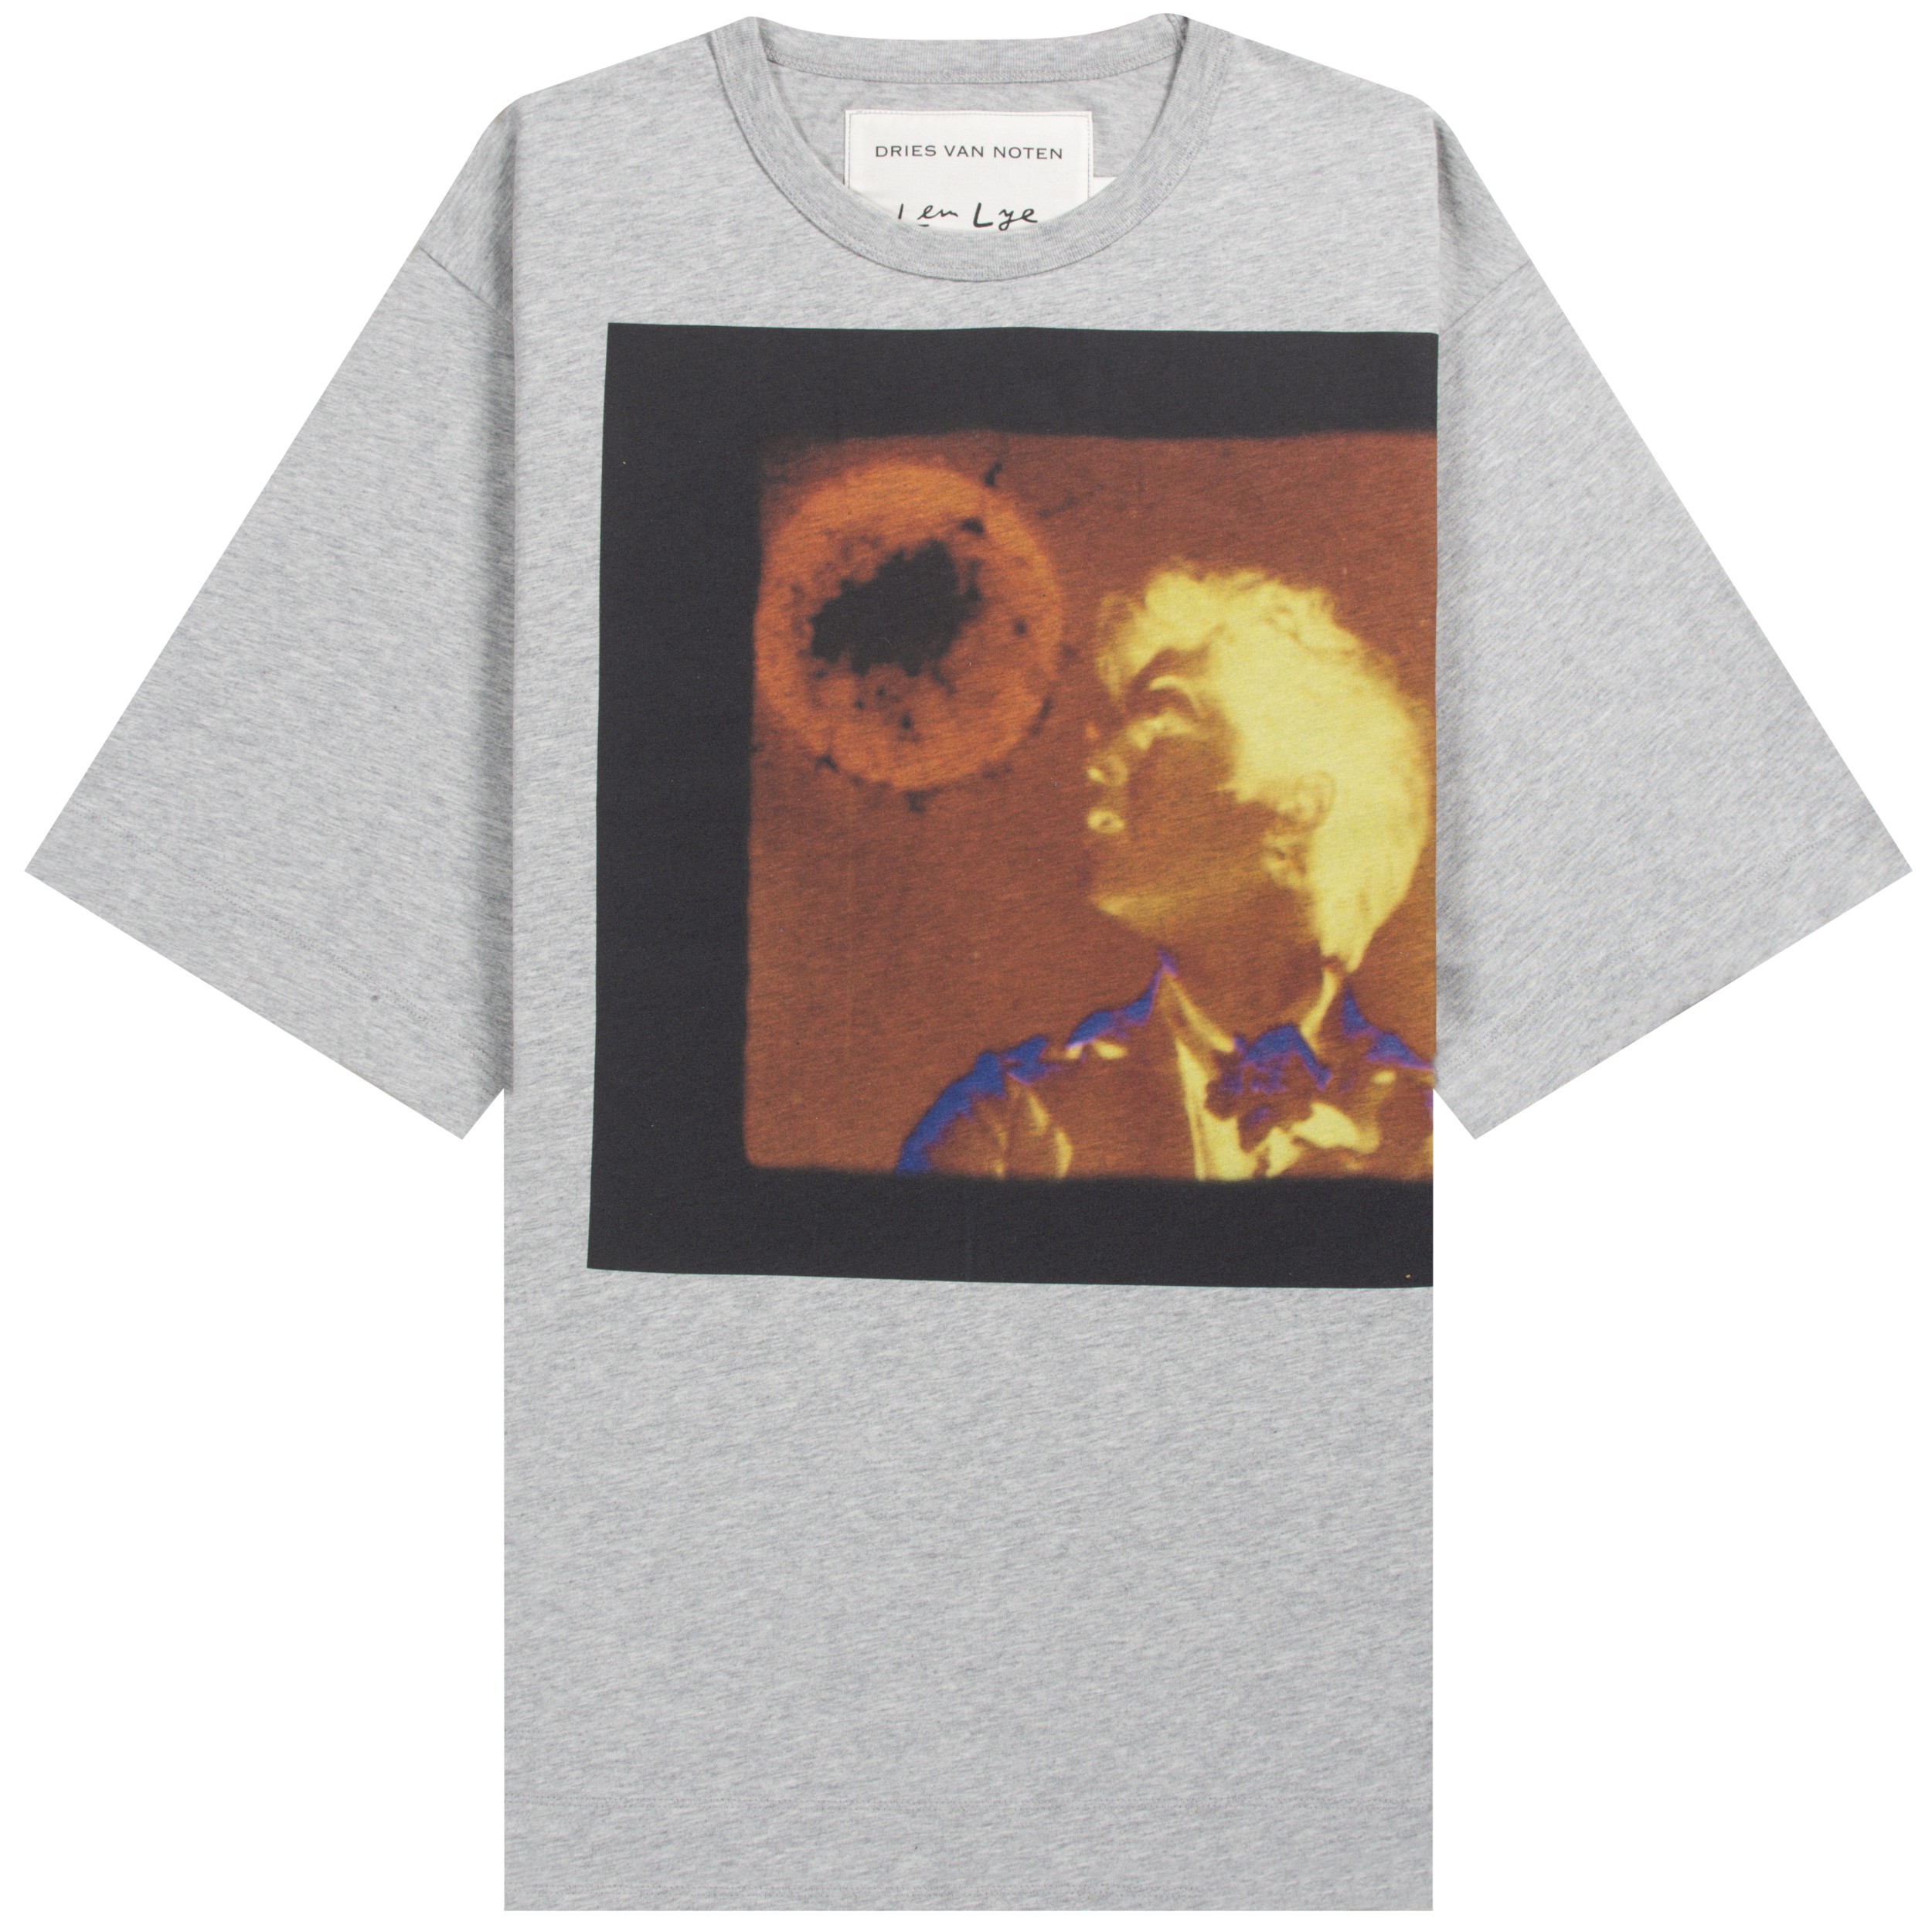 Dries Van Noten Len Lye 'Rainbow Dance' Print T-Shirt Grey